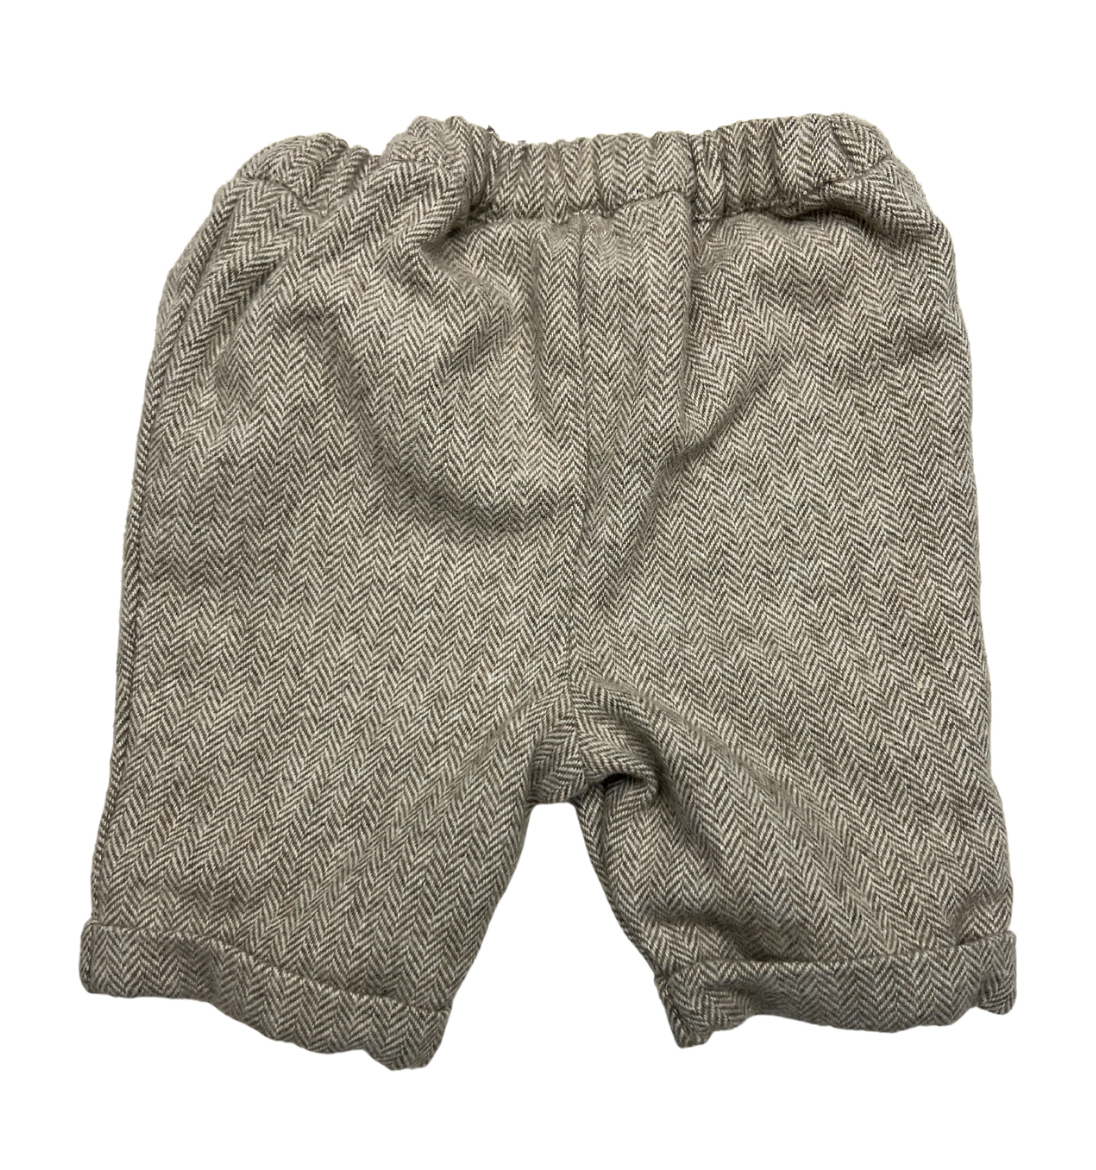 THOMAS BROWN - Pantalon beige - 6/12 mois